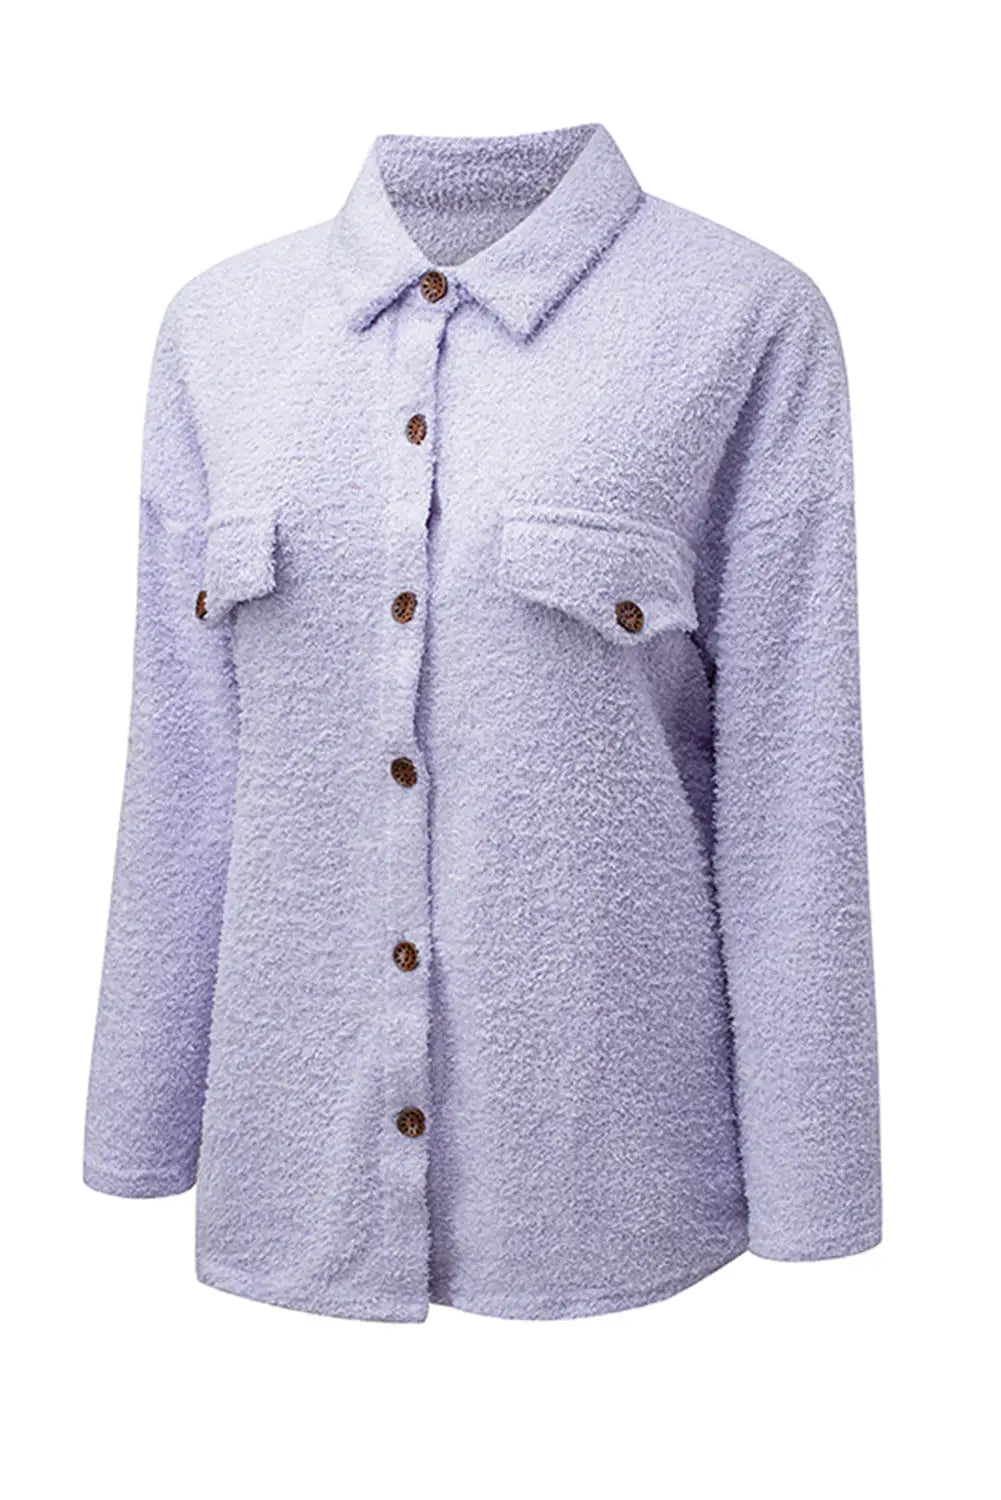 Purple plush button down pocketed shirt jacket - jackets